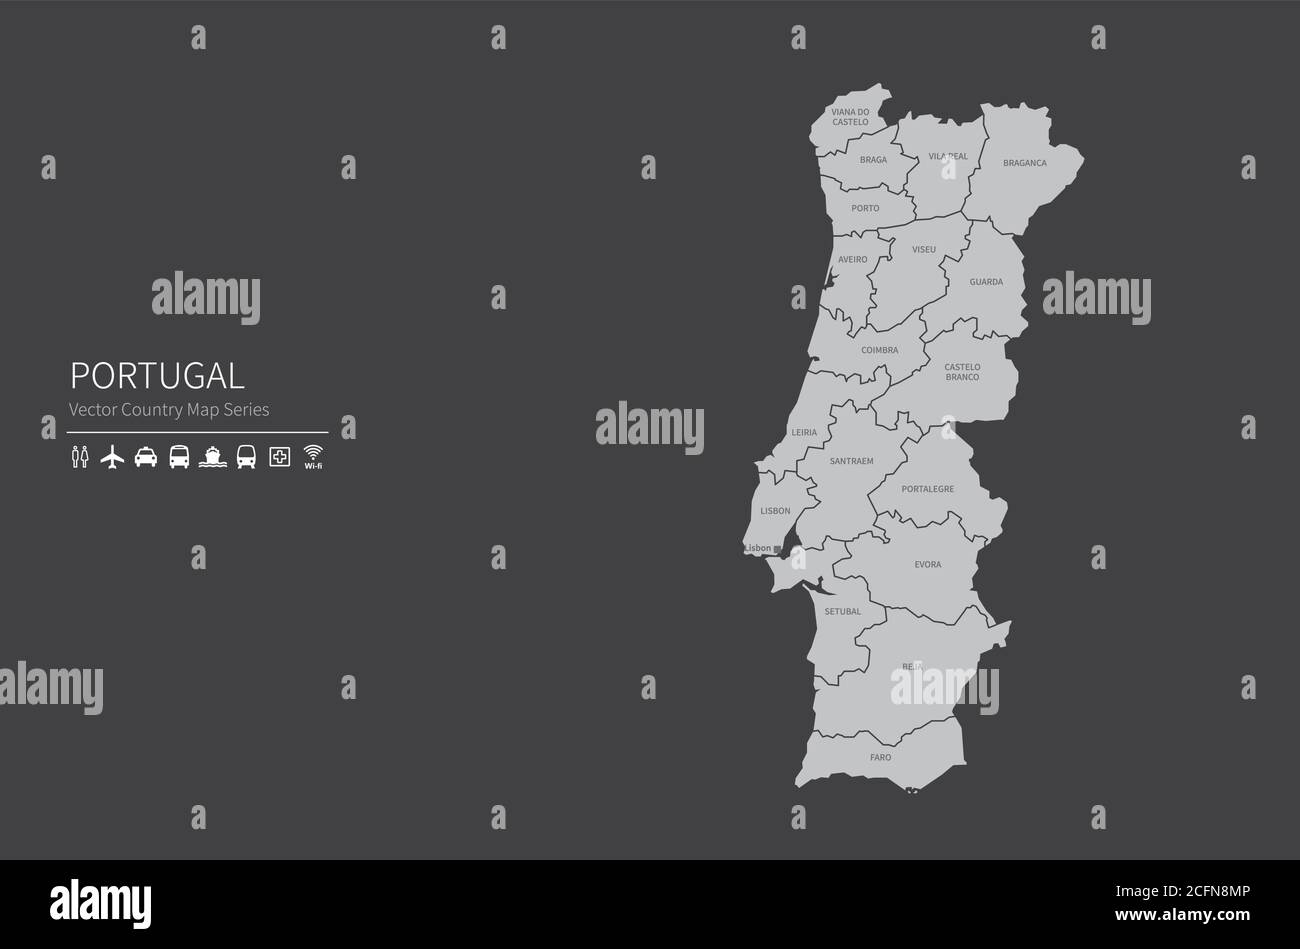 Portugal-Karte. Nationale Karte der Welt. Grau gefärbte Länder Kartenserie. Stock Vektor